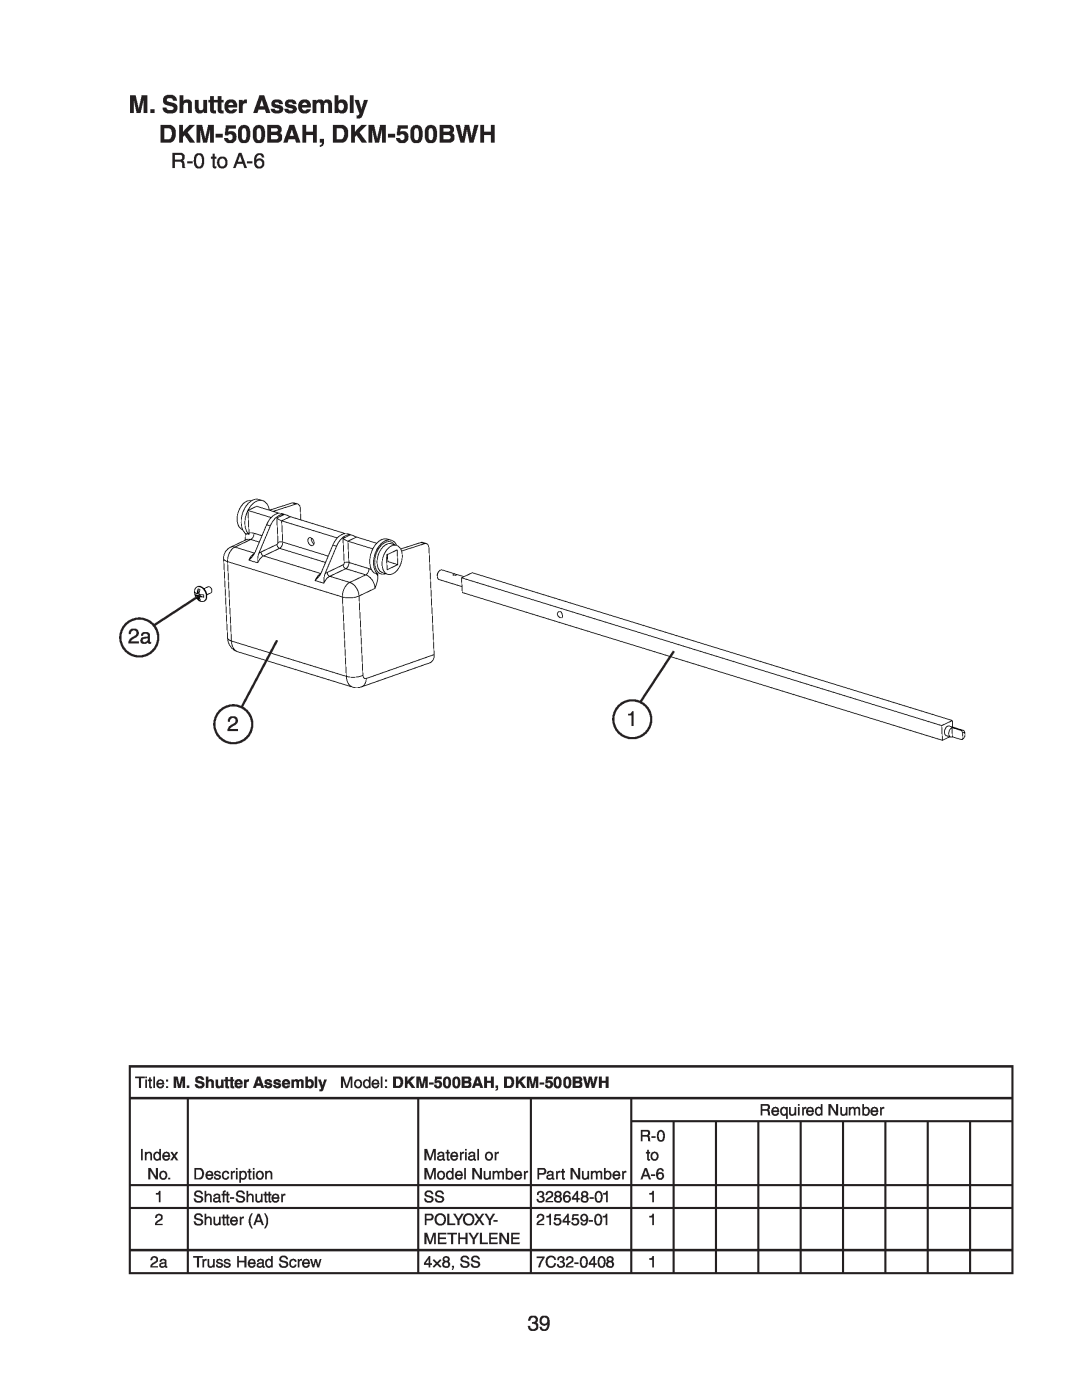 Hoshizaki manual M. Shutter Assembly DKM-500BAH, DKM-500BWH, R-0to A-6 2a 